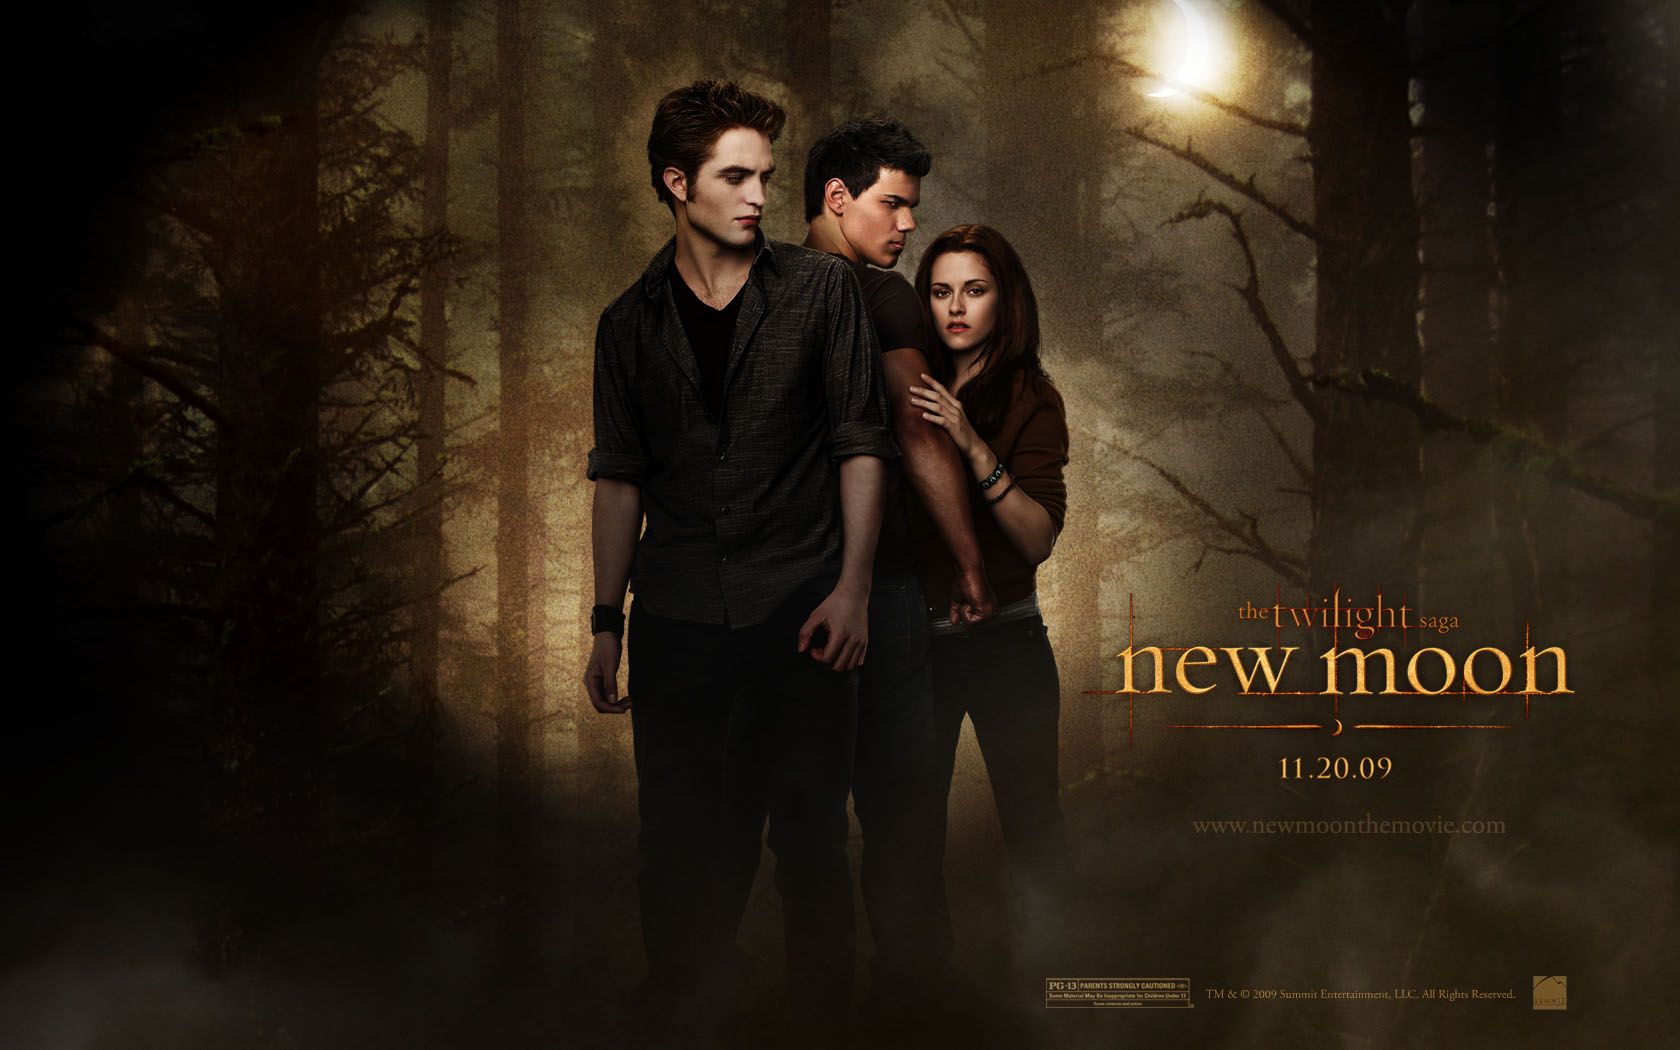 twilight saga new moon full movie online free no download